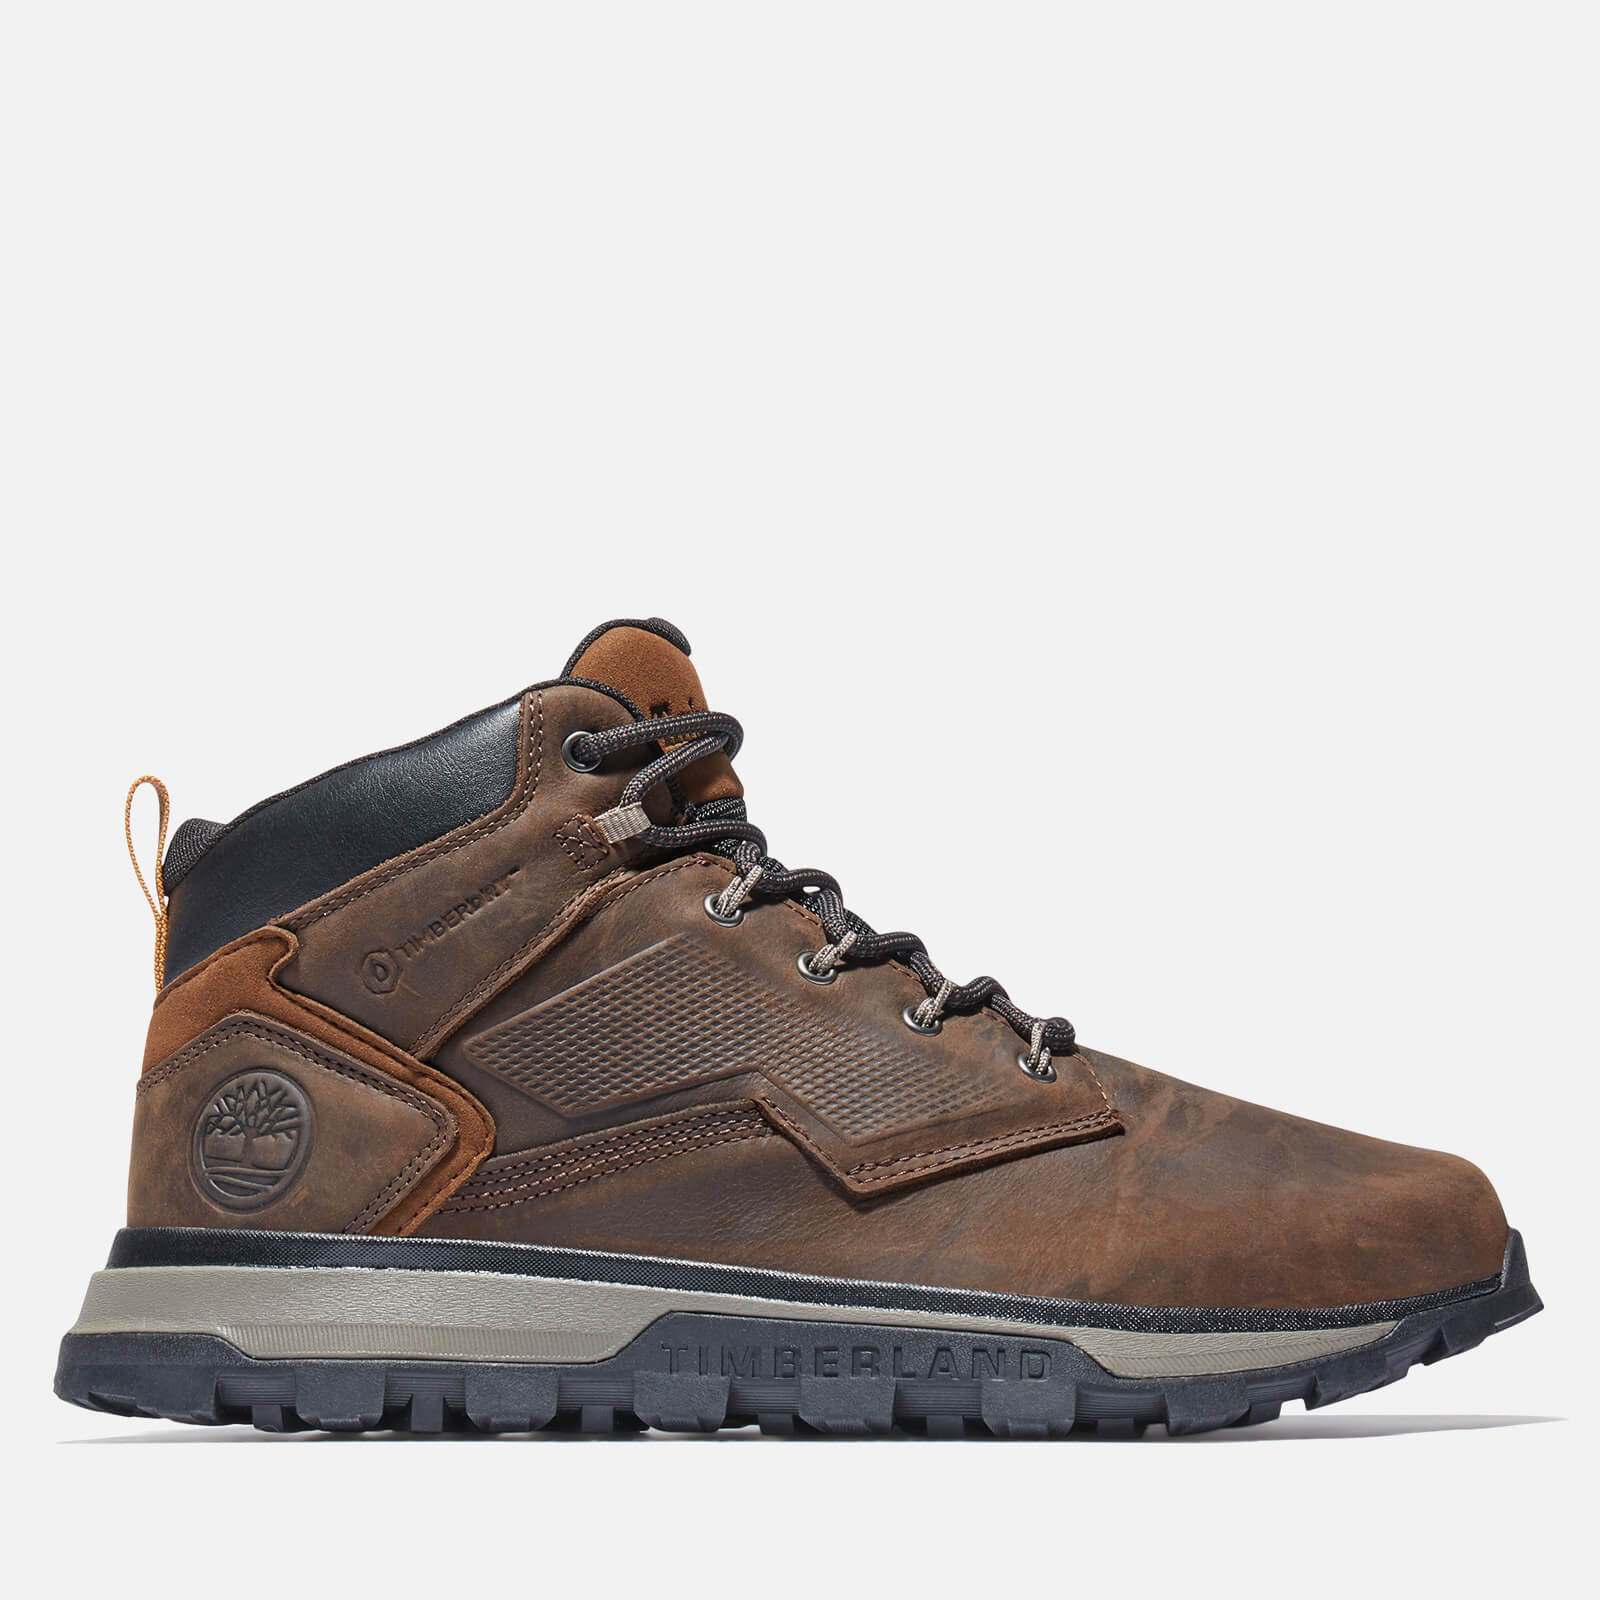 Timberland Men's Treeline Mid Waterproof Leather Hiking Boots - Dark Brown - UK 7